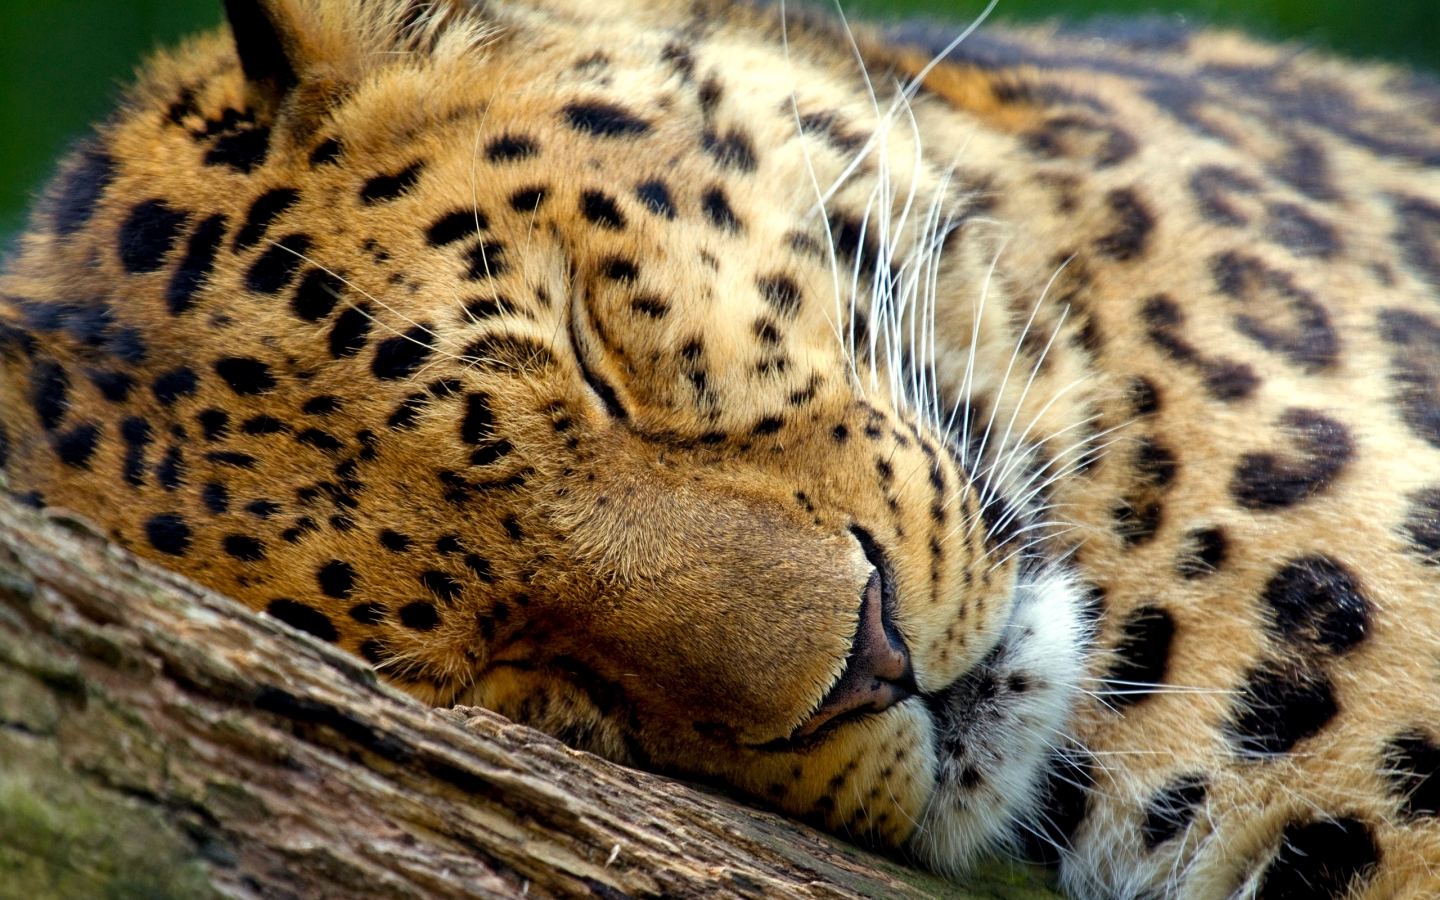 Cute Leopard Sleeping for 1440 x 900 widescreen resolution